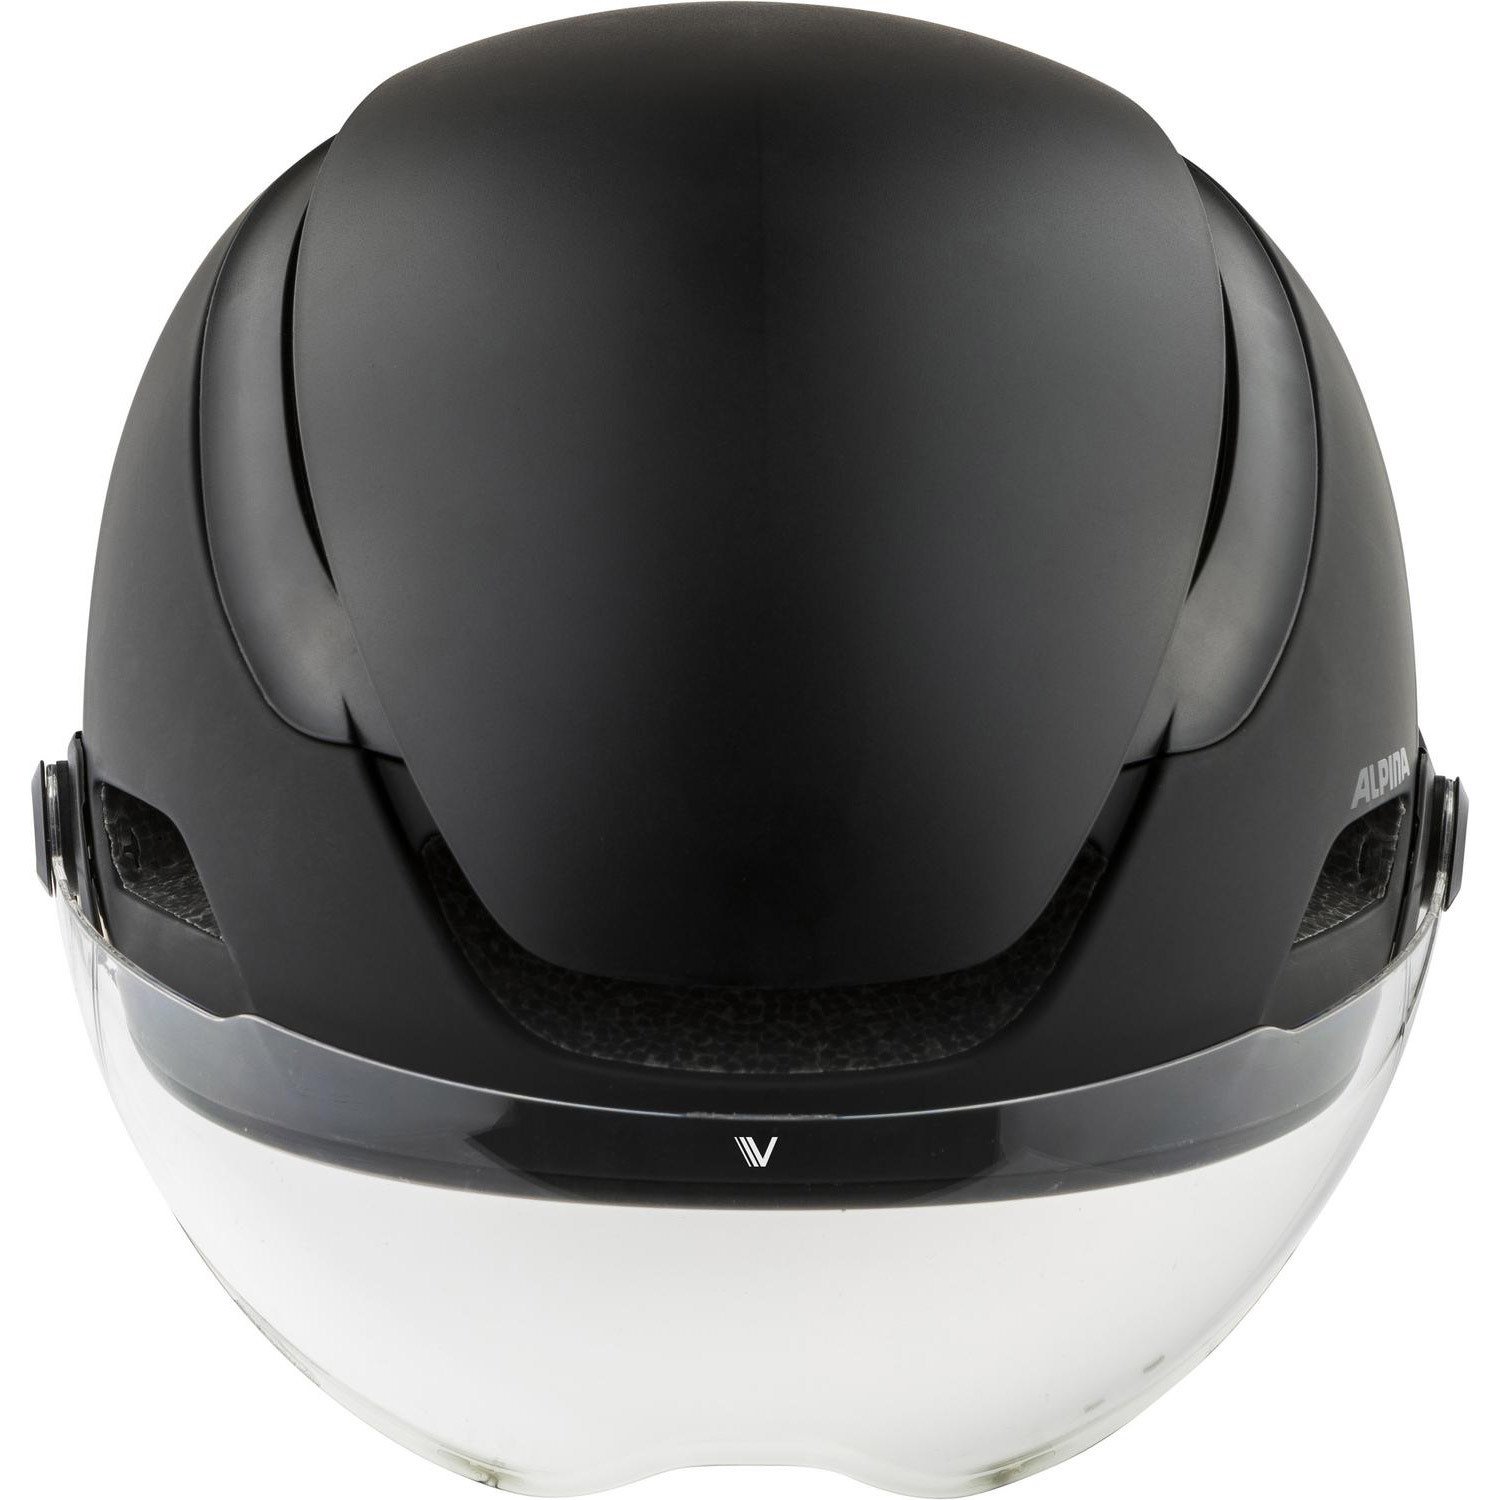 Alpina helm ALTONA V black-stealth matt 